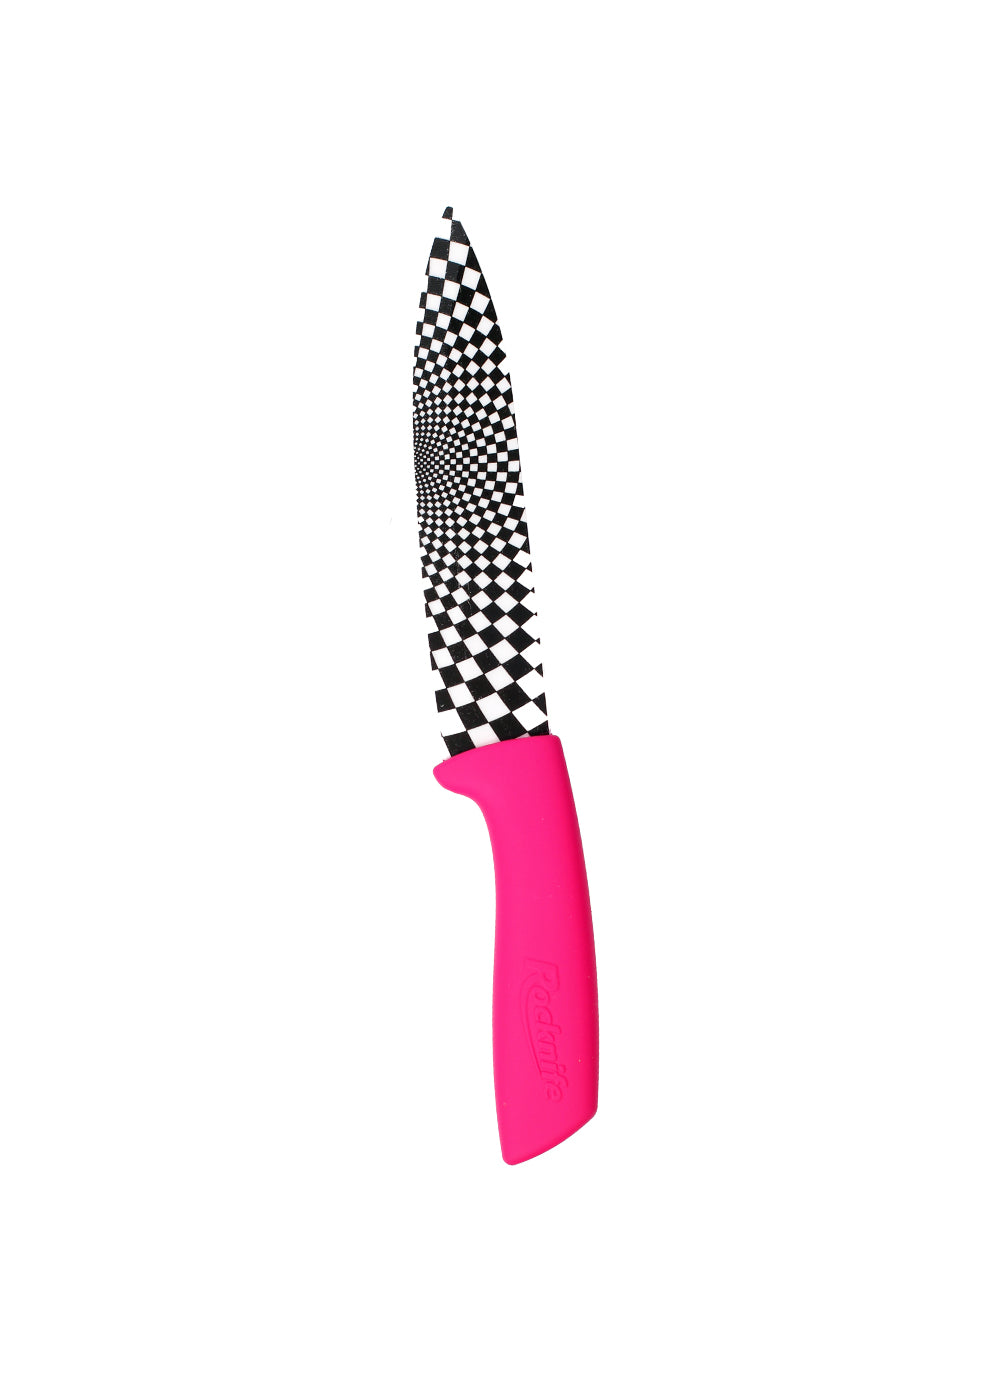 5 Inch Ceramic Kitchen Knife - Pink